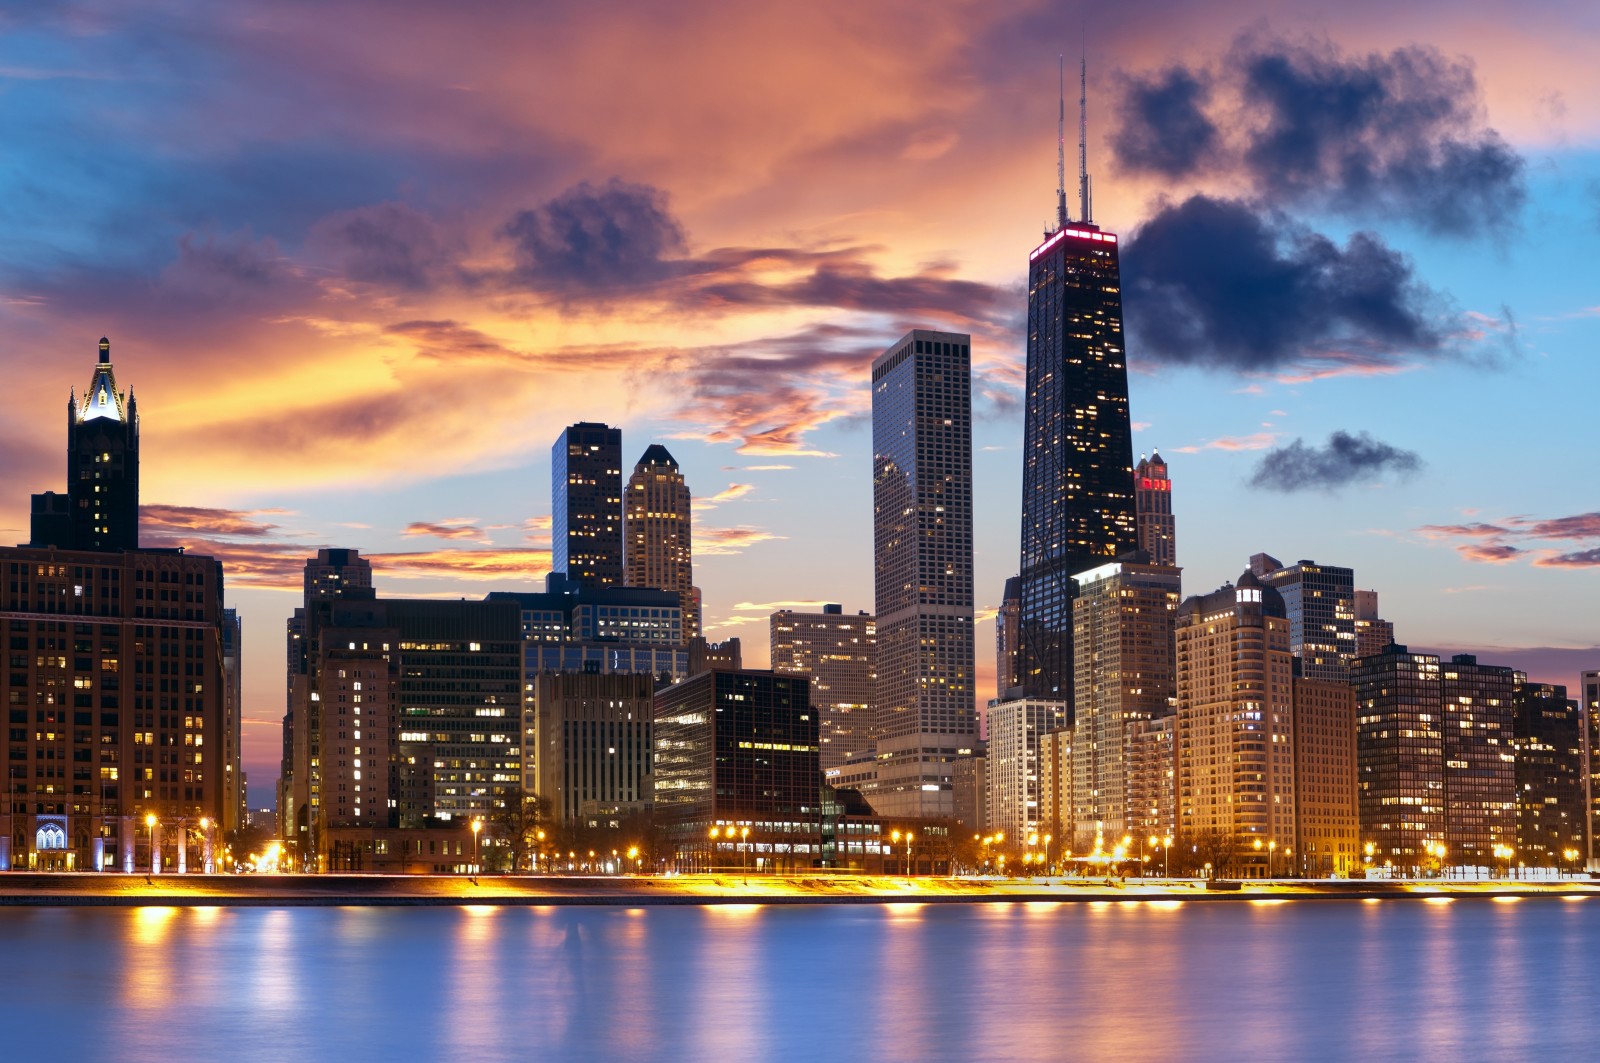 malam, sungai, gedung pencakar langit, rumah, berjalan kaki, kota, Chicago, awan.